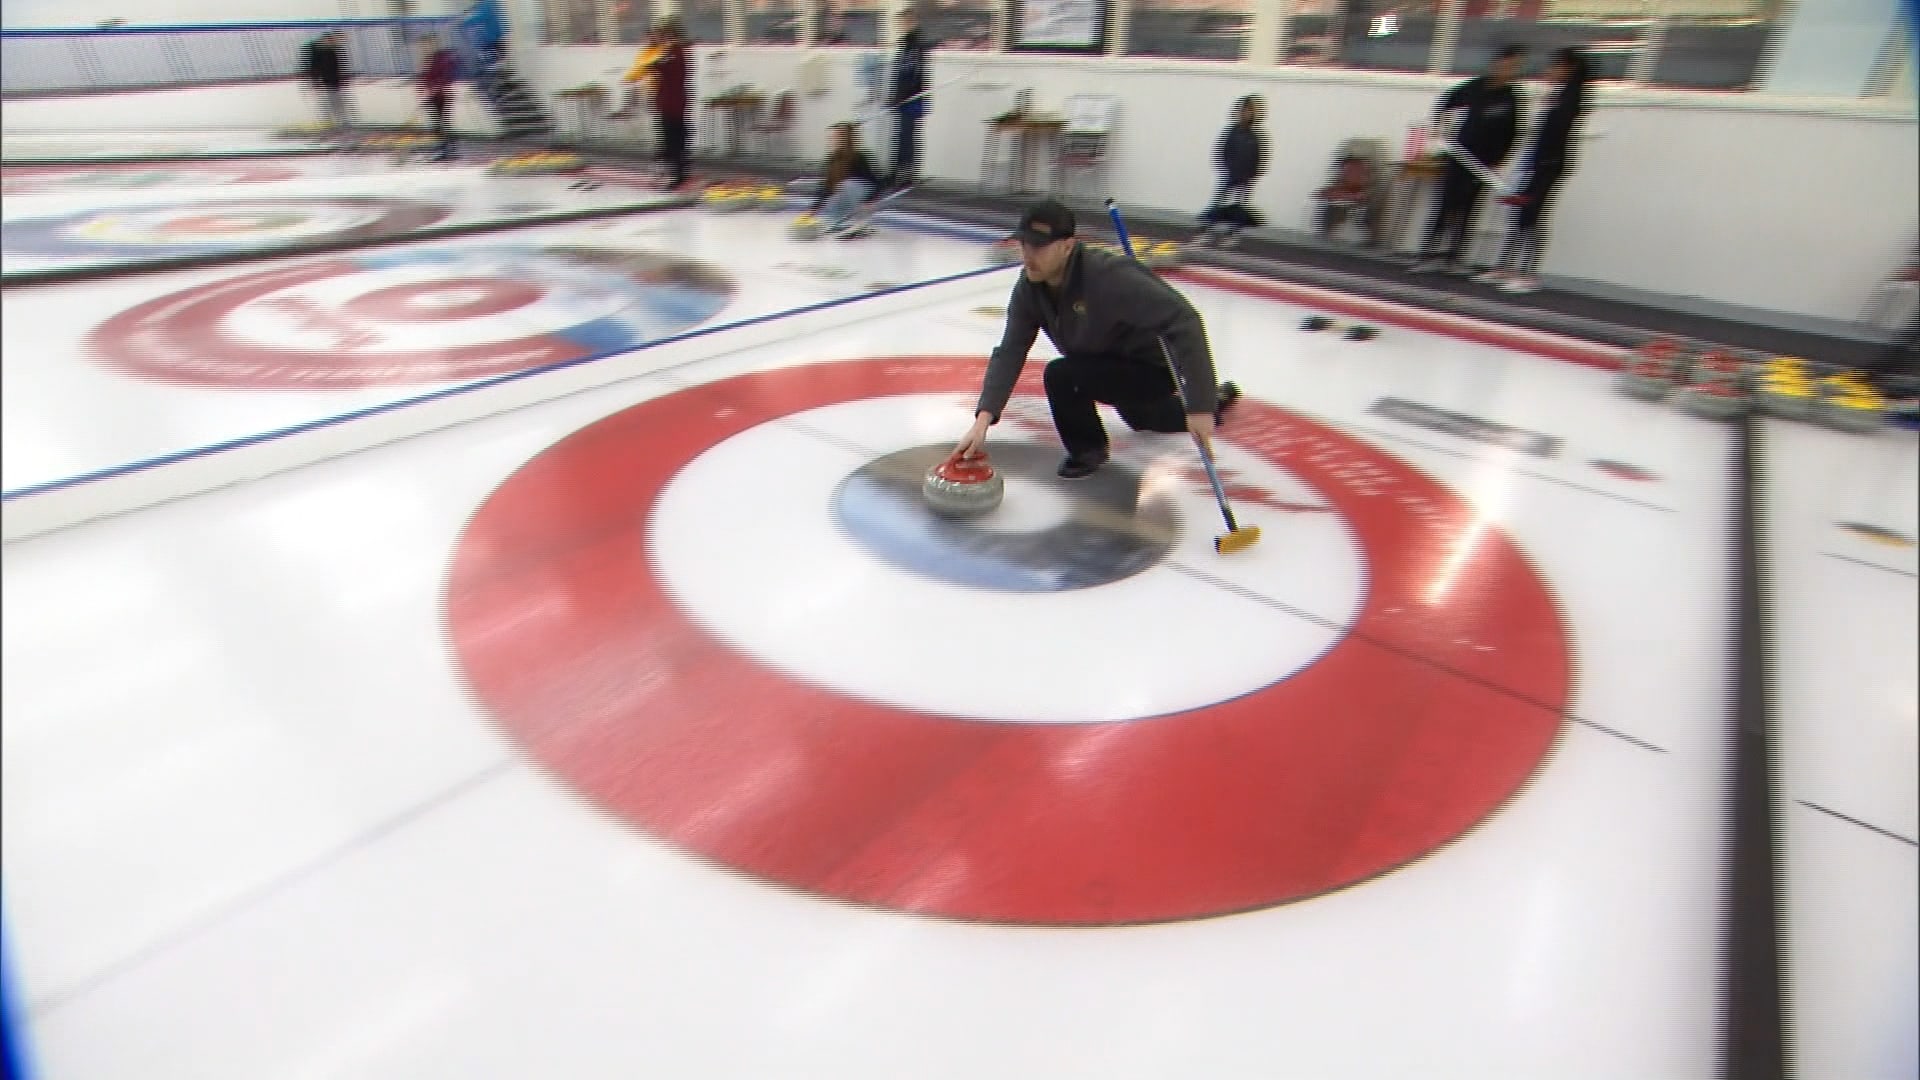 World Women's Curling: Canada vs. South Korea